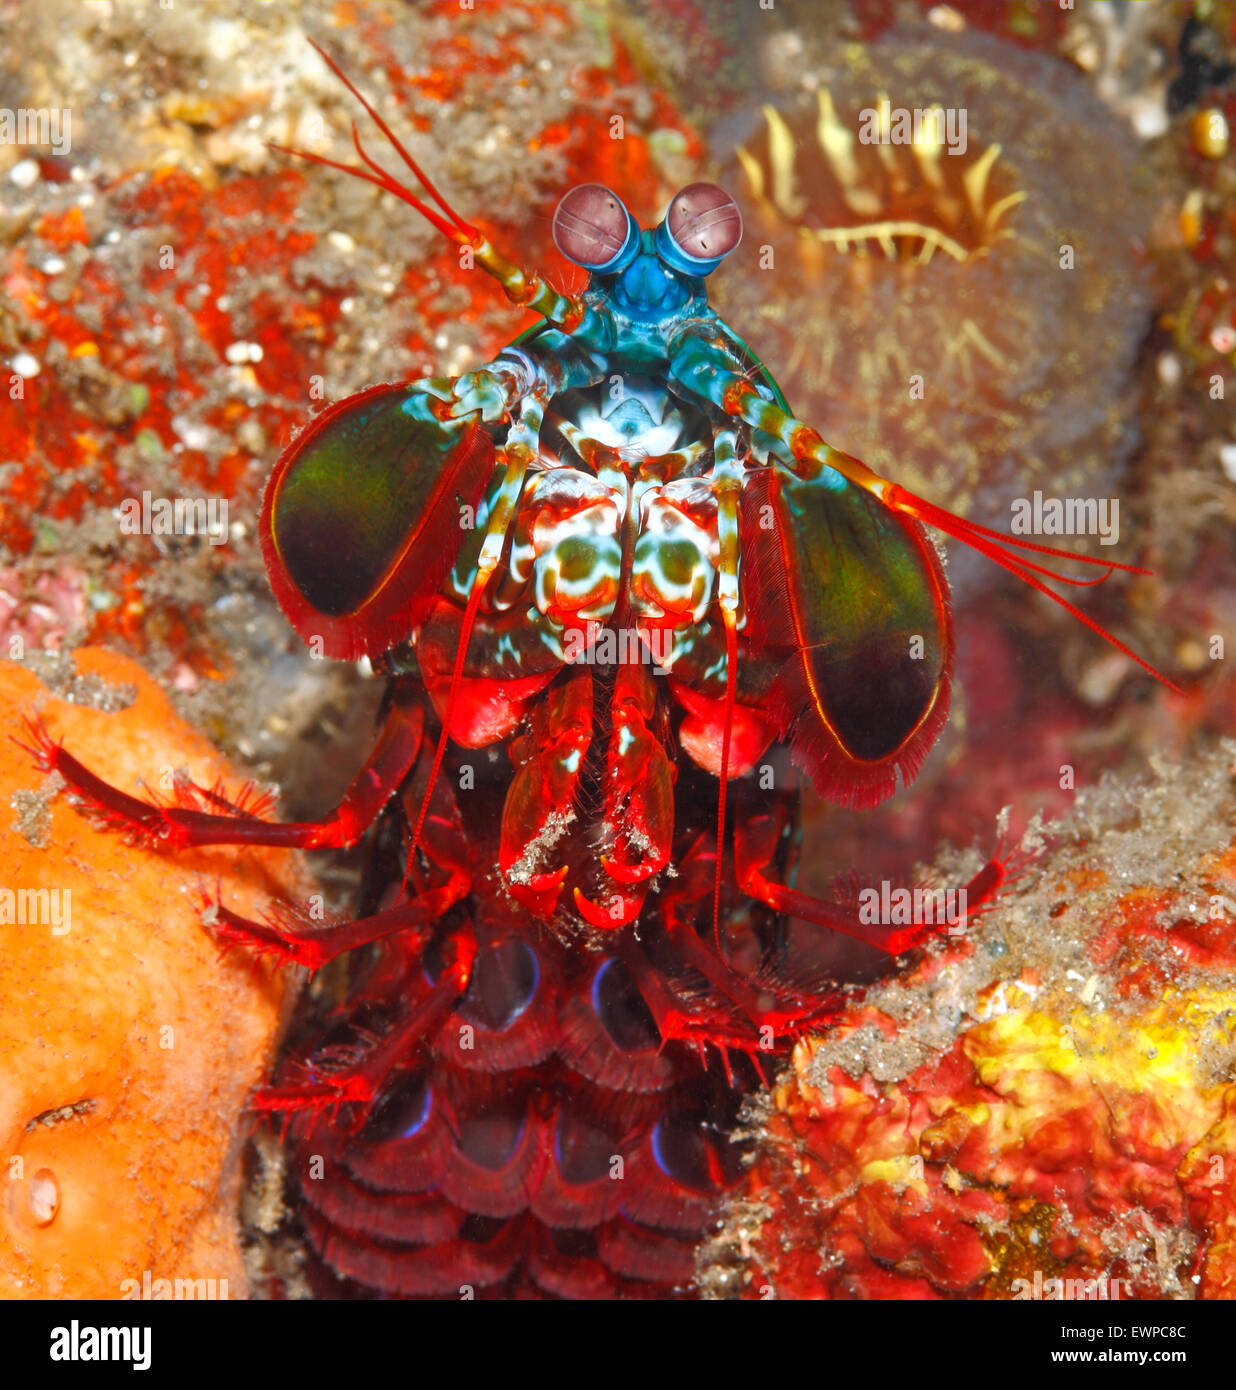 Peacock Mantis Shrimp, Odontodactylus scyllarus, also known as a Harlequin Mantis Shrimp, Painted Mantis Shrimp and Clown Mantis Shrimp. Stock Photo